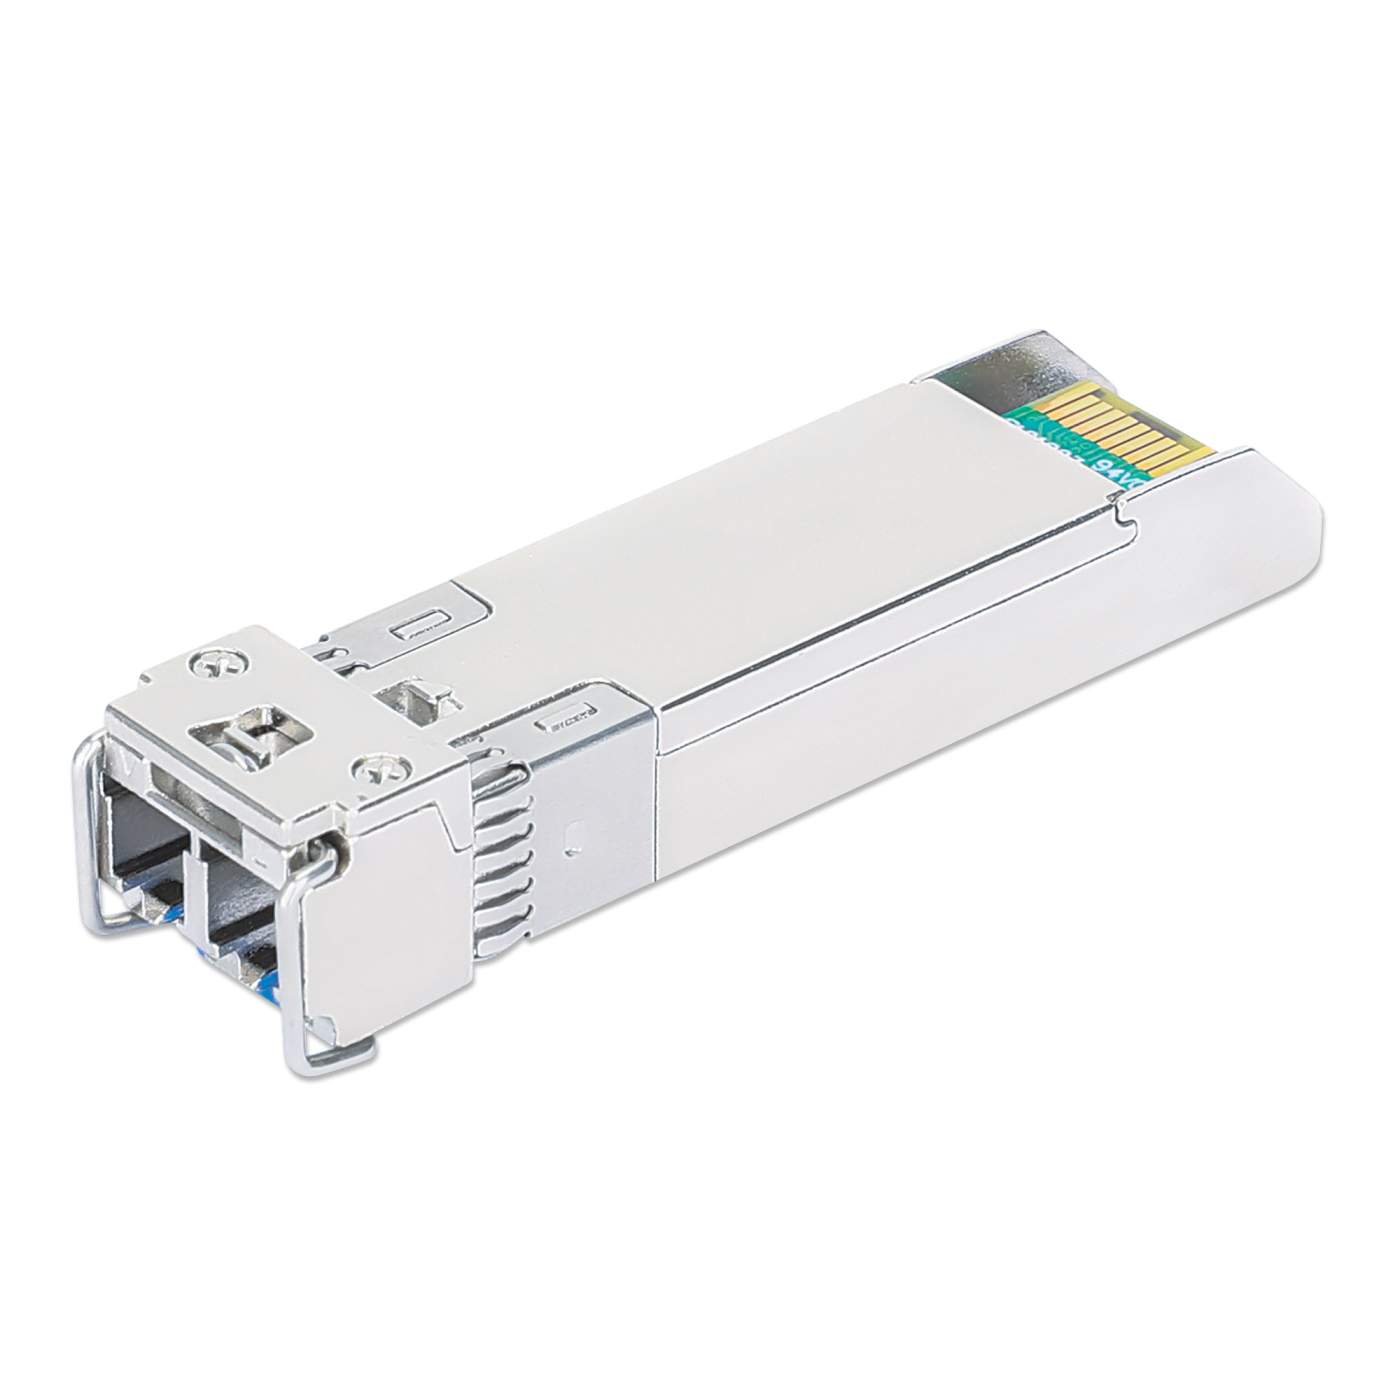 10 Gigabit SFP+ Modul / Mini-GBIC Transceiver für LWL-Kabel Image 3